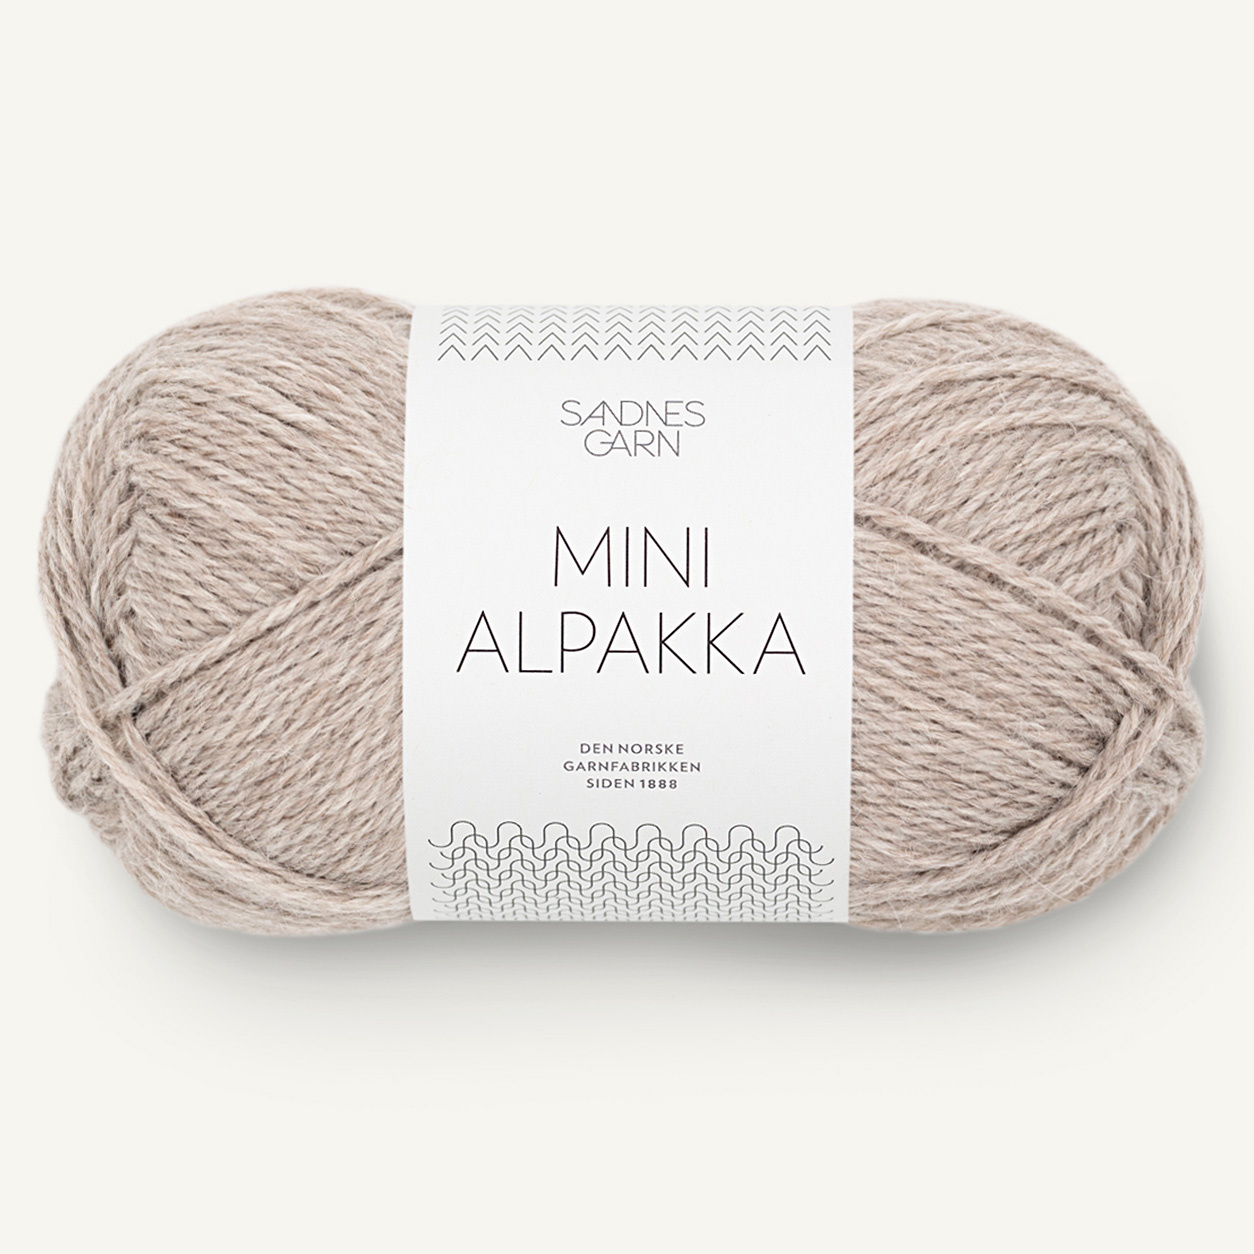 Sandnes Mini Alpakka, 2650, Graubeige Meliert